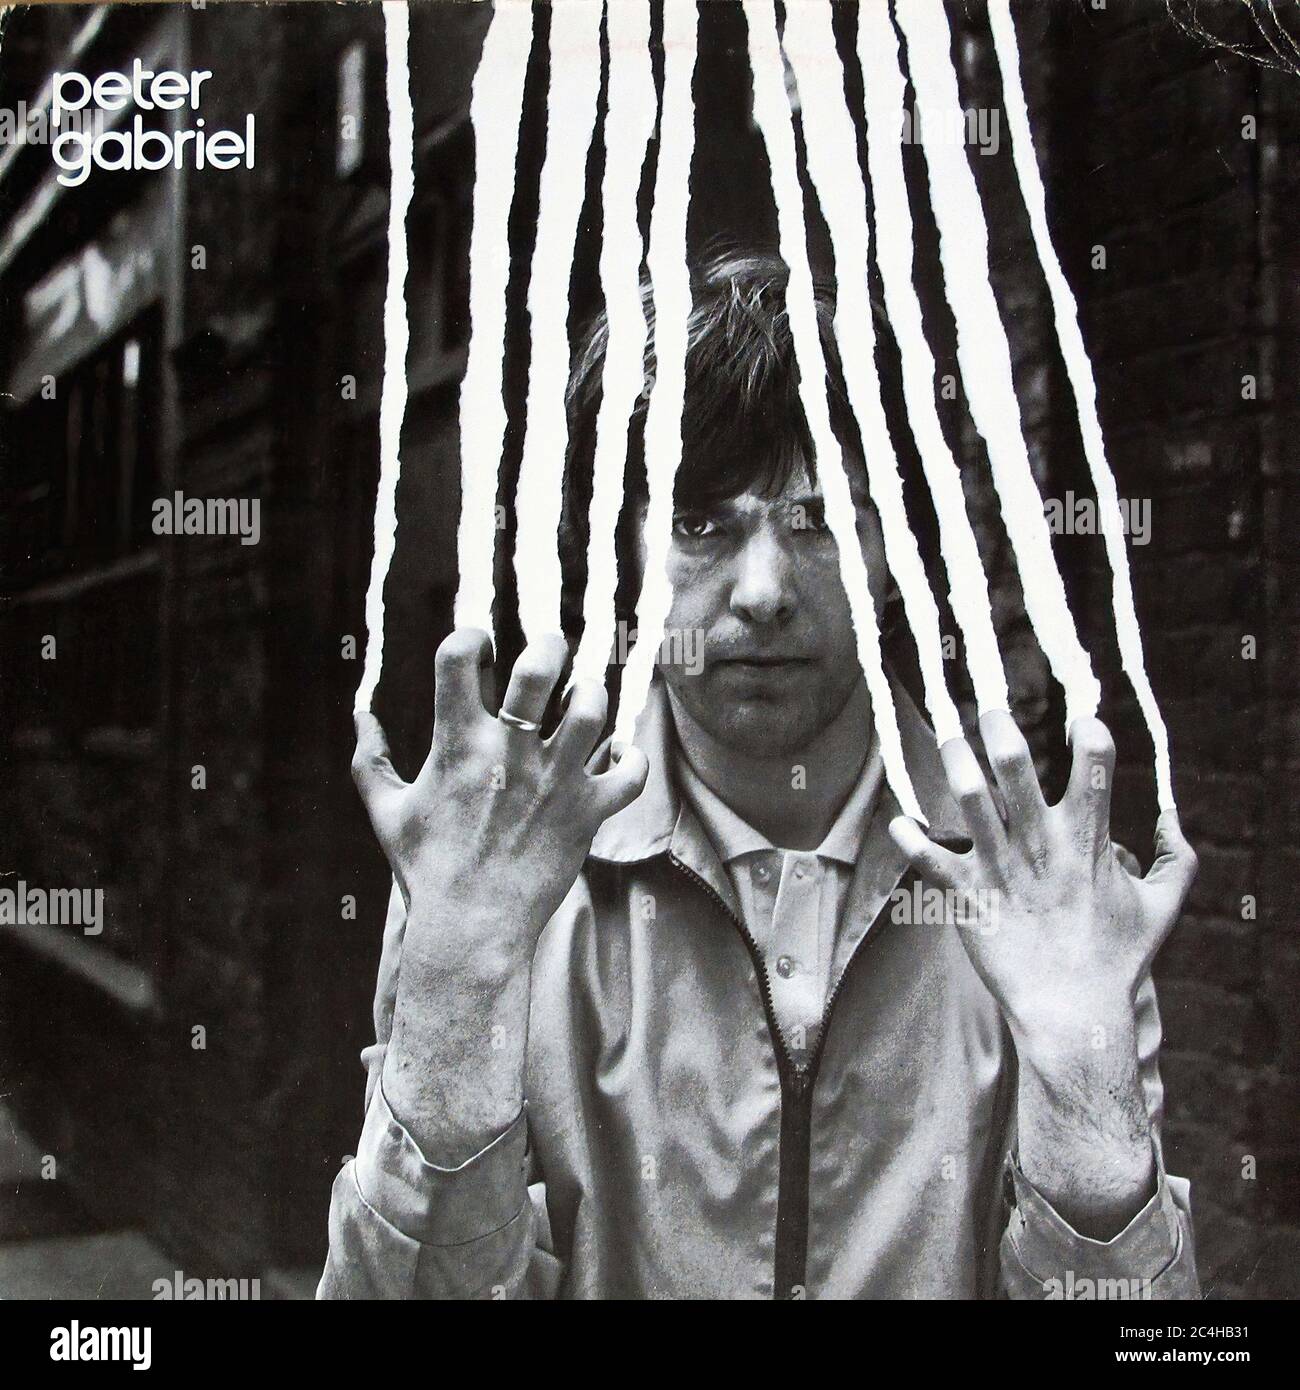 Den anden dag biografi Bør Peter Gabriel 2 Scratch Lyrics Booklet 12'' Lp Vinyl - Vintage Record Cover  Stock Photo - Alamy